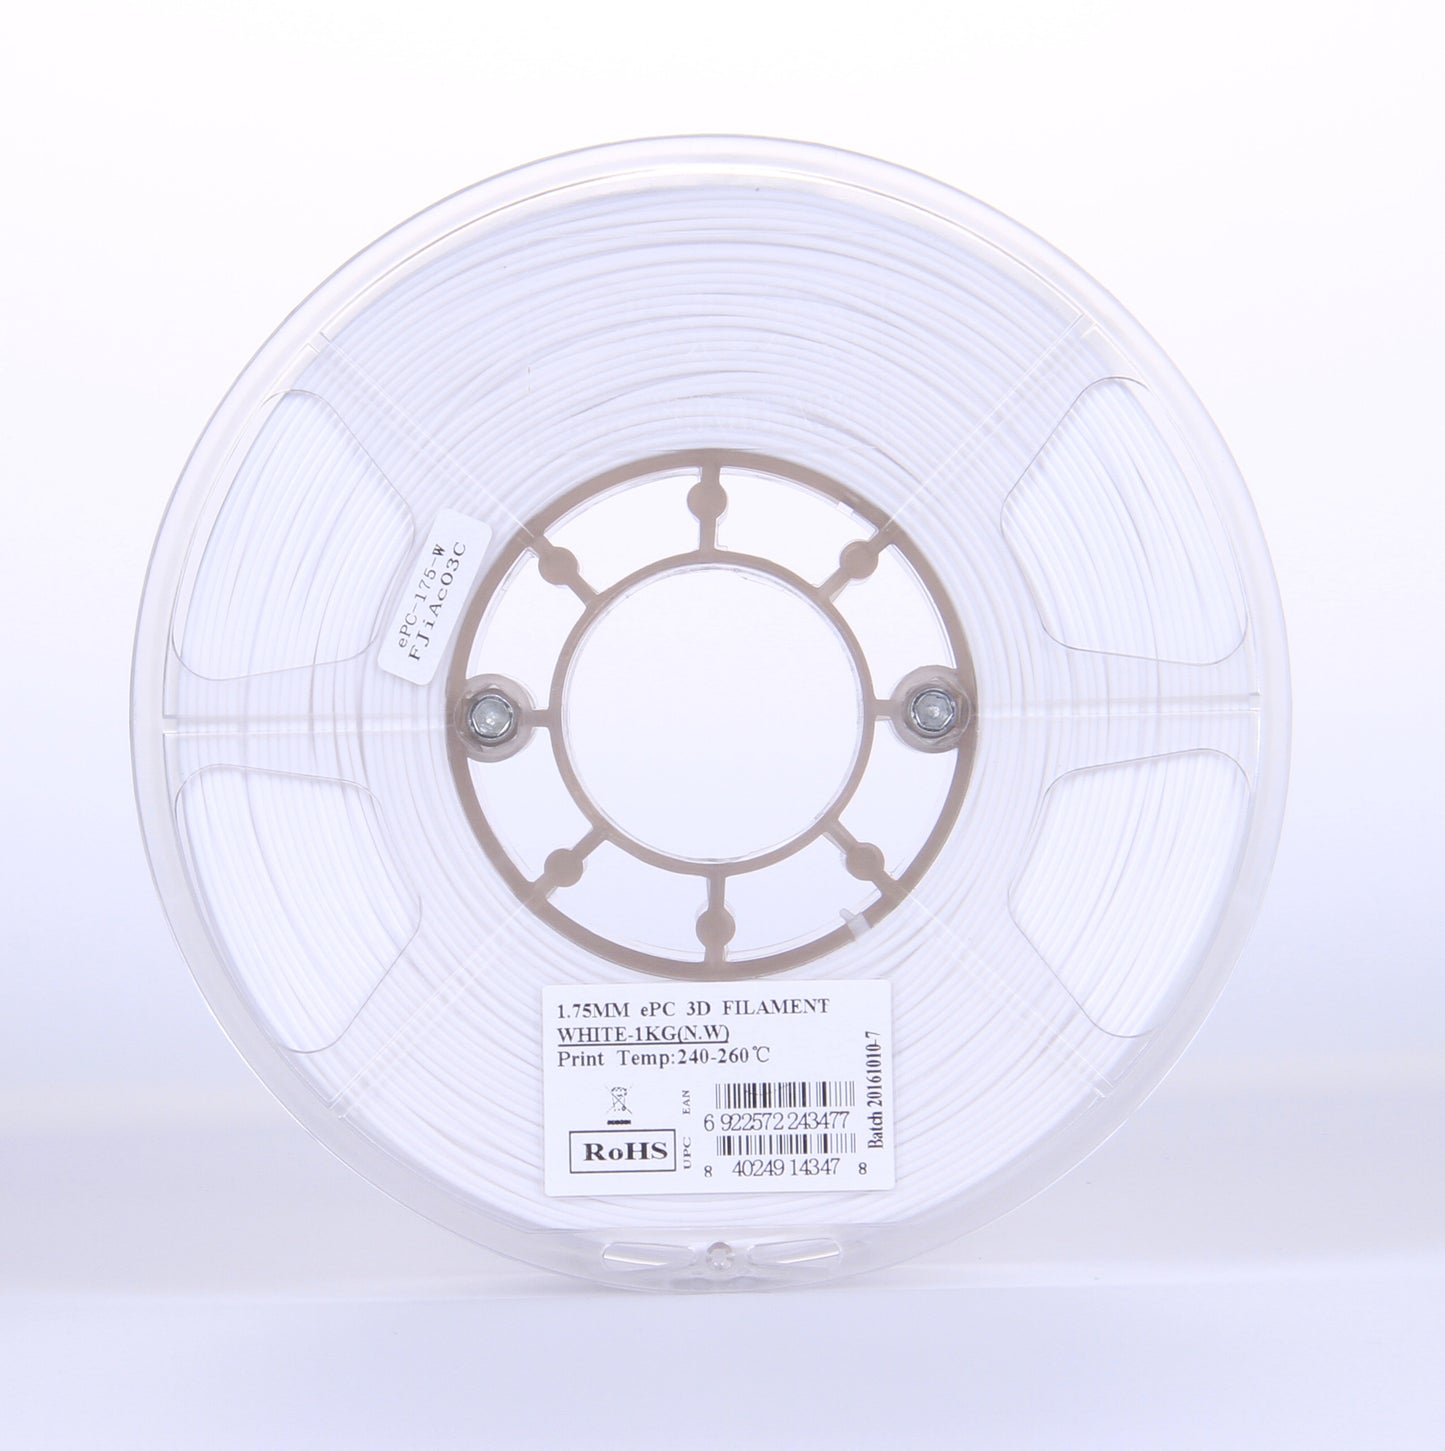 Clearance eSUN ePC (PolyCarbonate) Filament 1.75mm